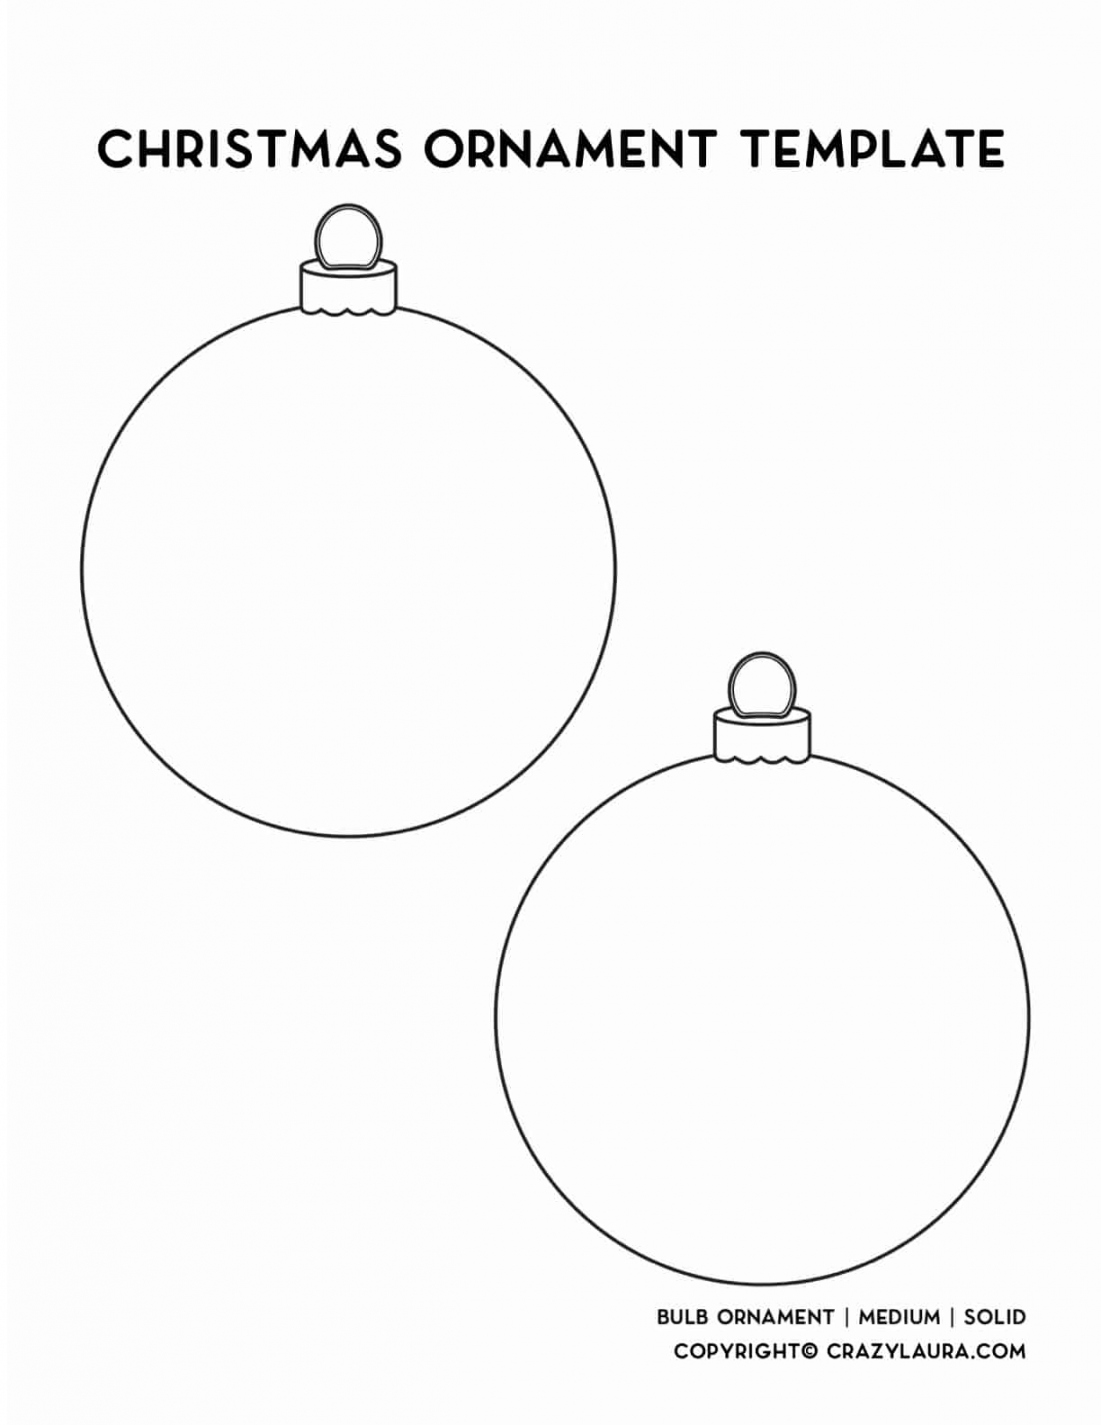 Free Christmas Ornament Template Printables & Outlines - Crazy Laura - FREE Printables - Ornament Printable